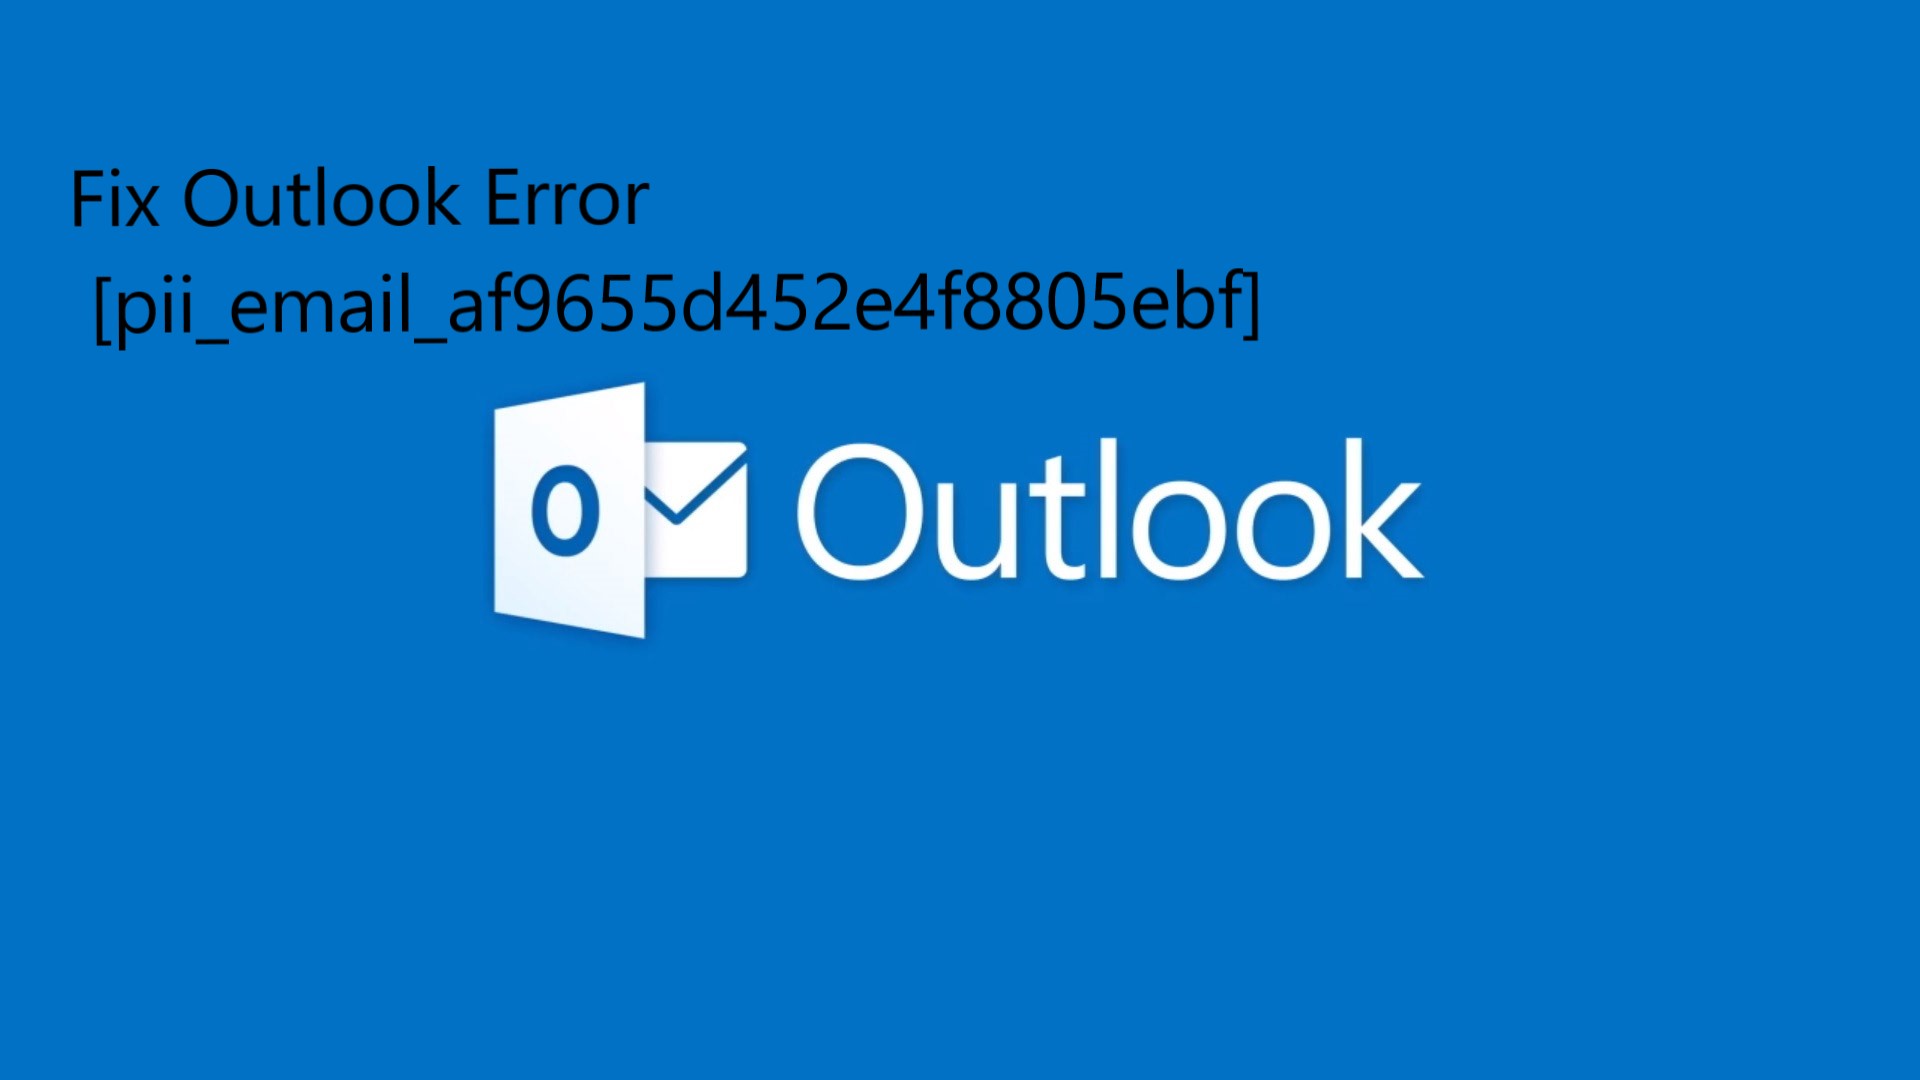 Fix Outlook Error [pii_email_af9655d452e4f8805ebf]